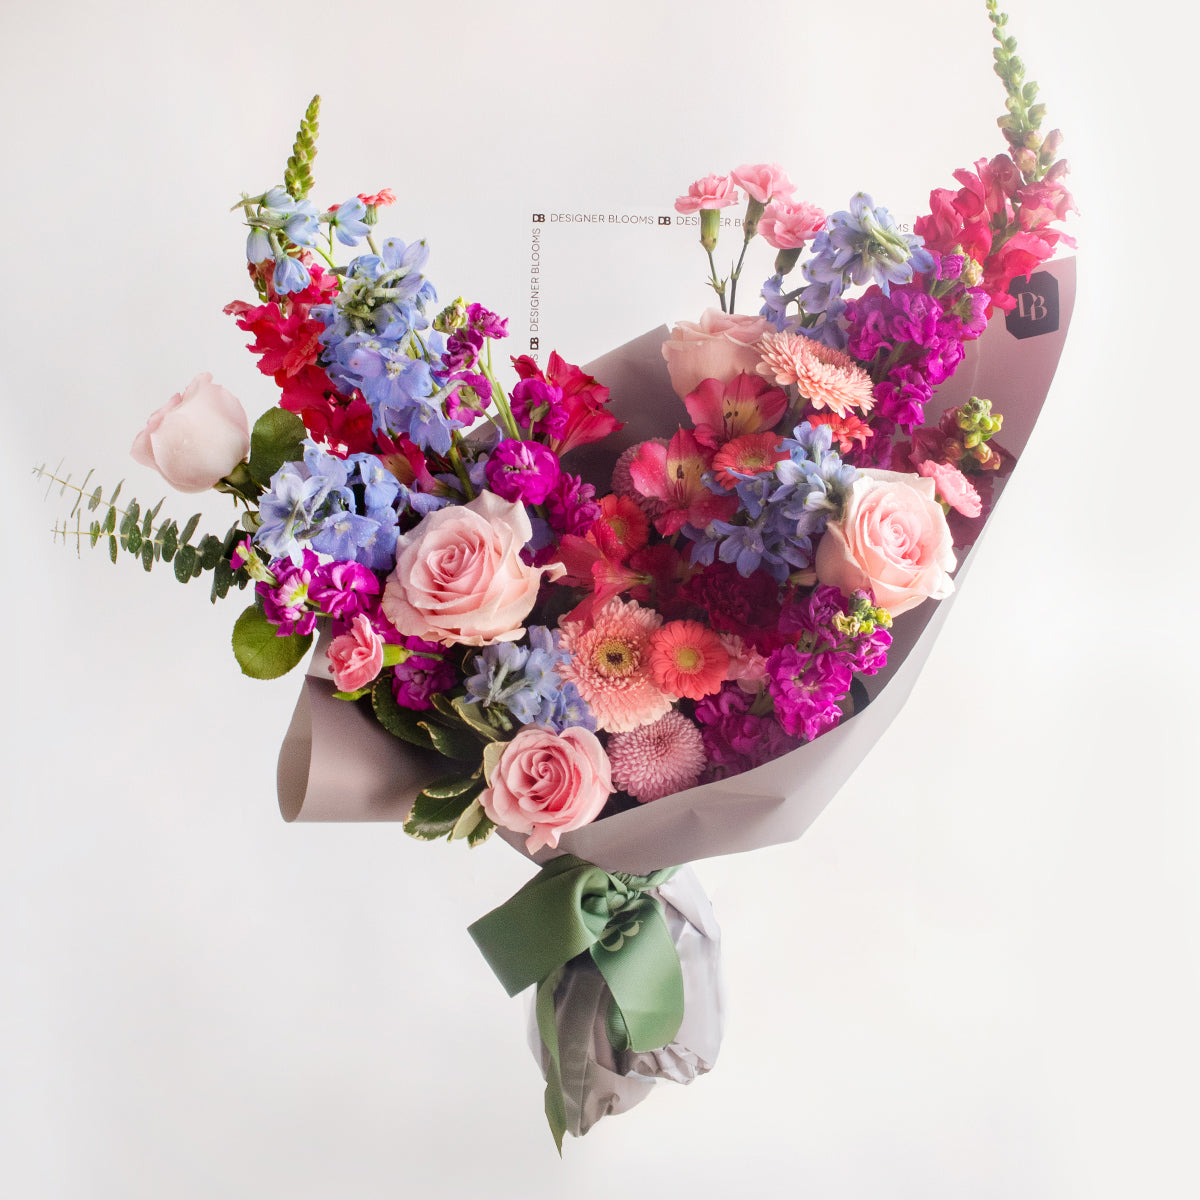 Wild Berry Bouquet Designer Blooms Canada